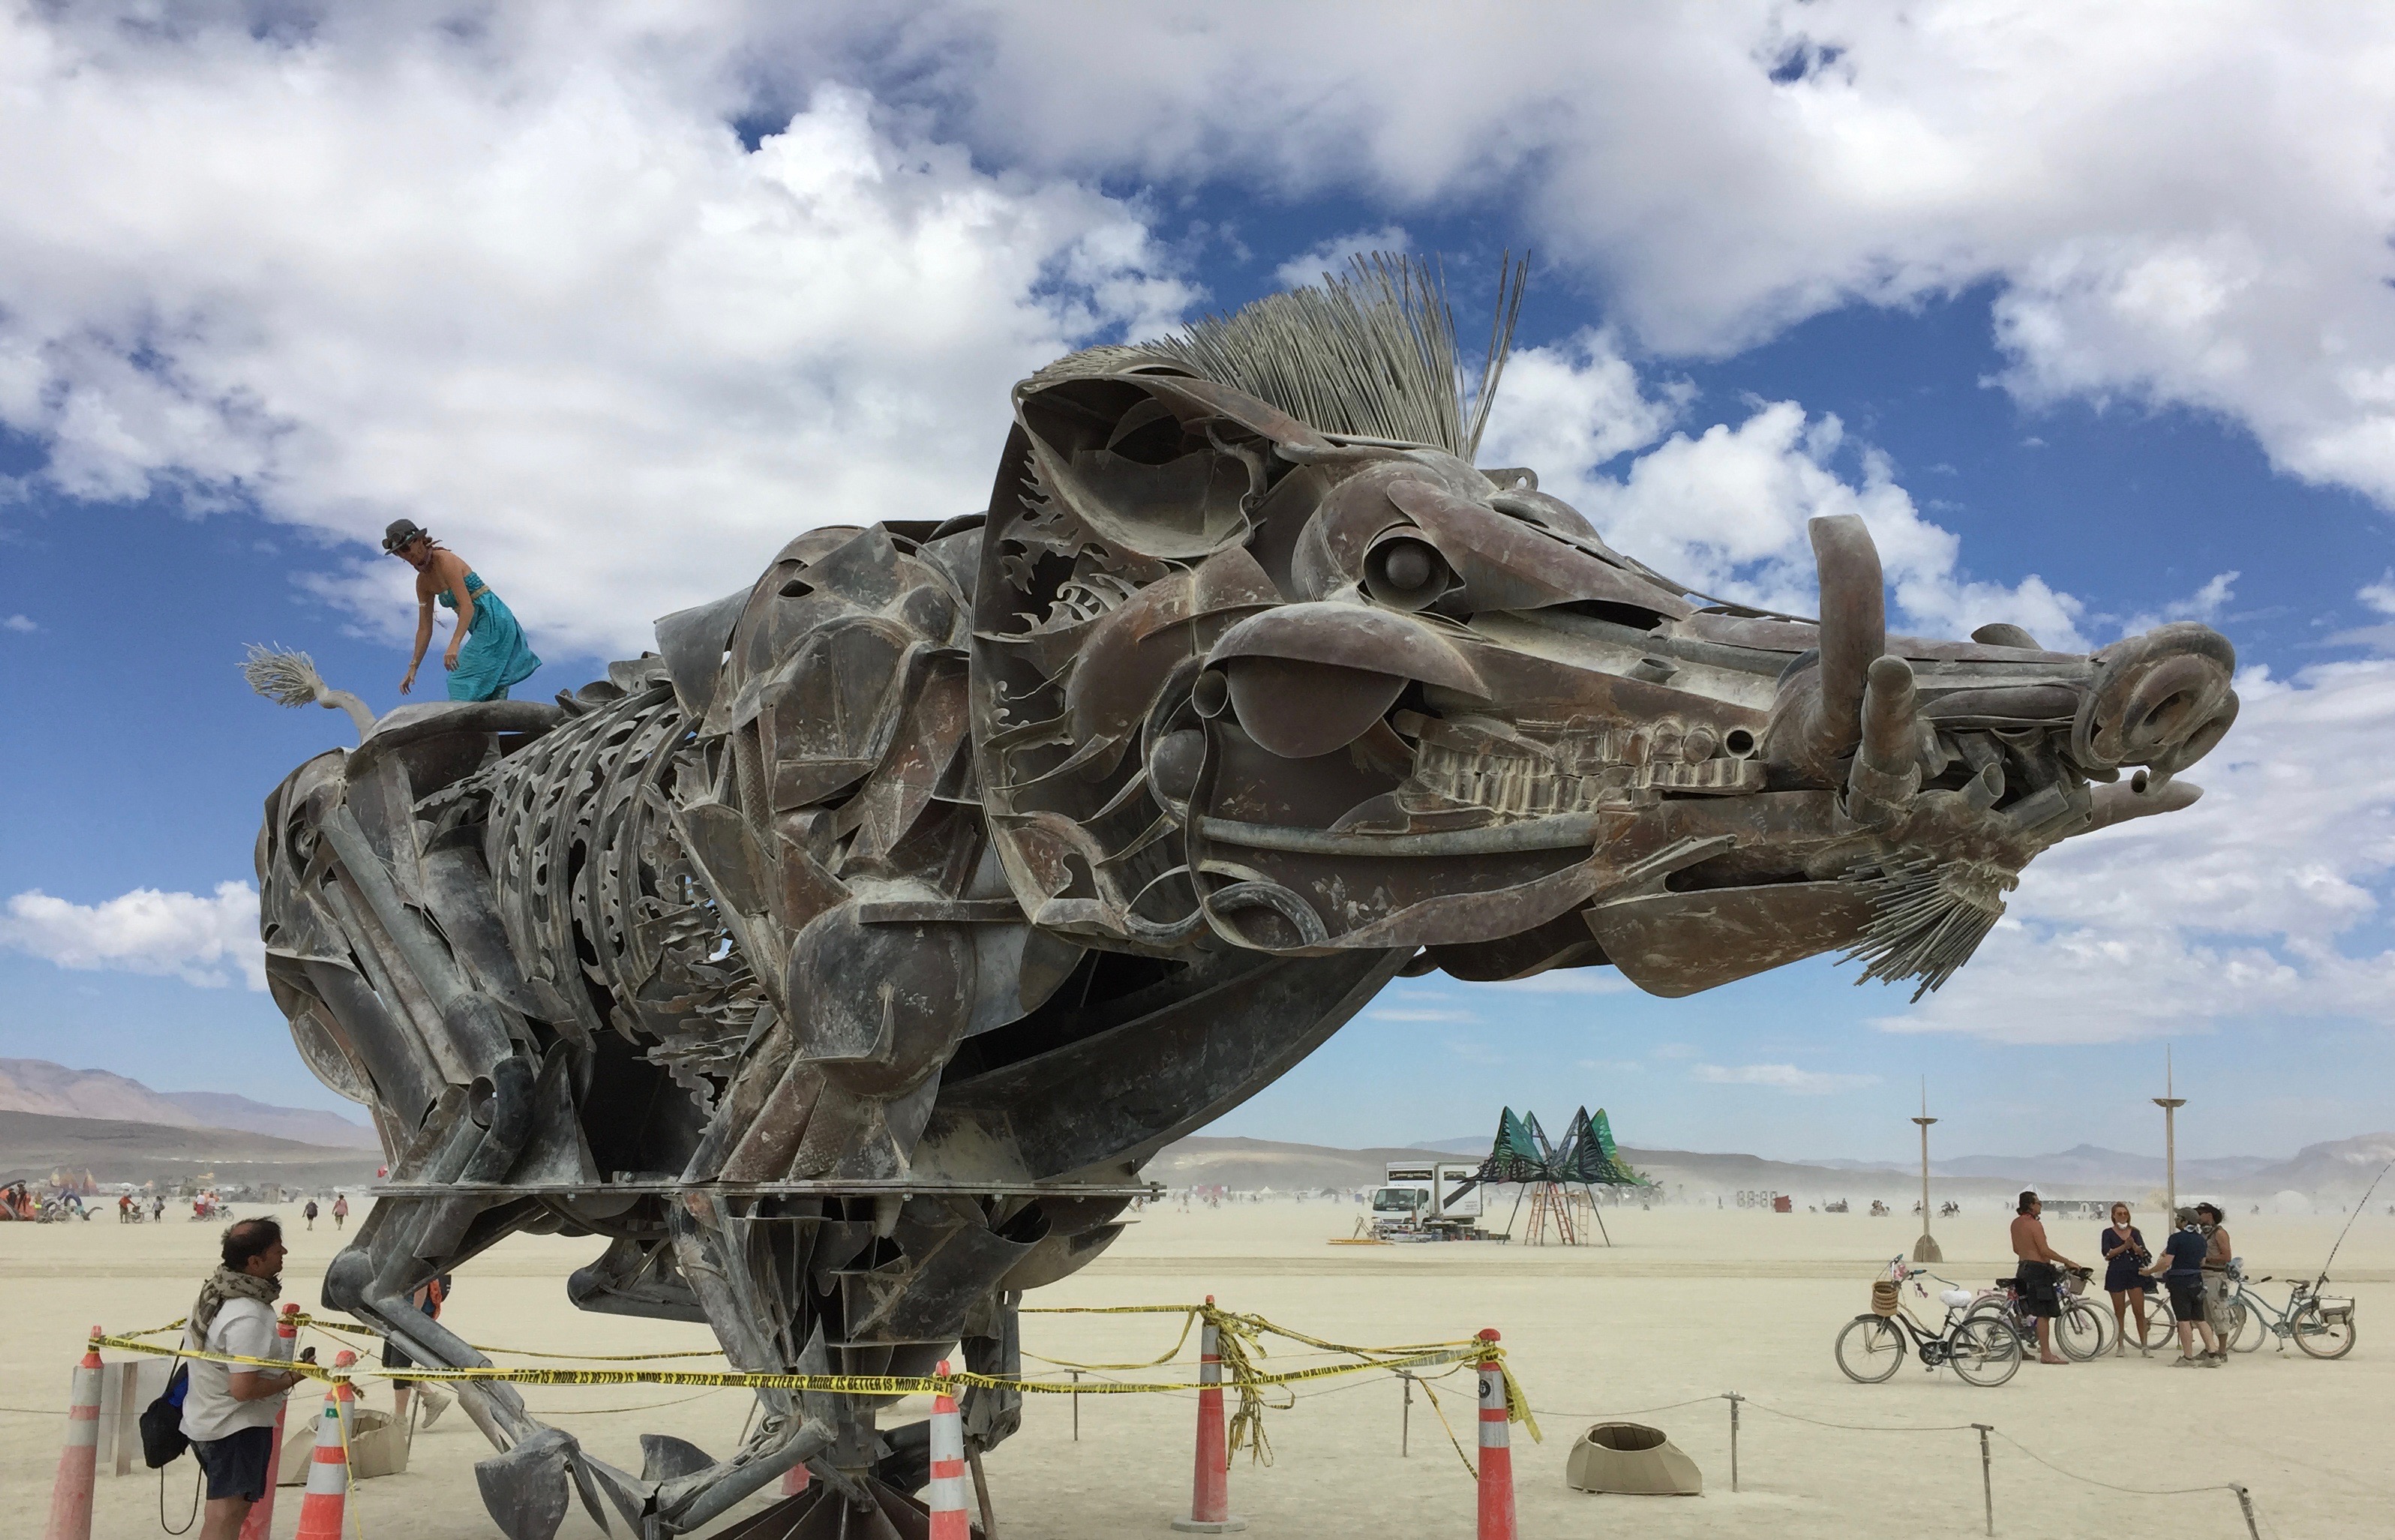 The Year of Herculean Art – and Animal Planet! | Burning Man Journal